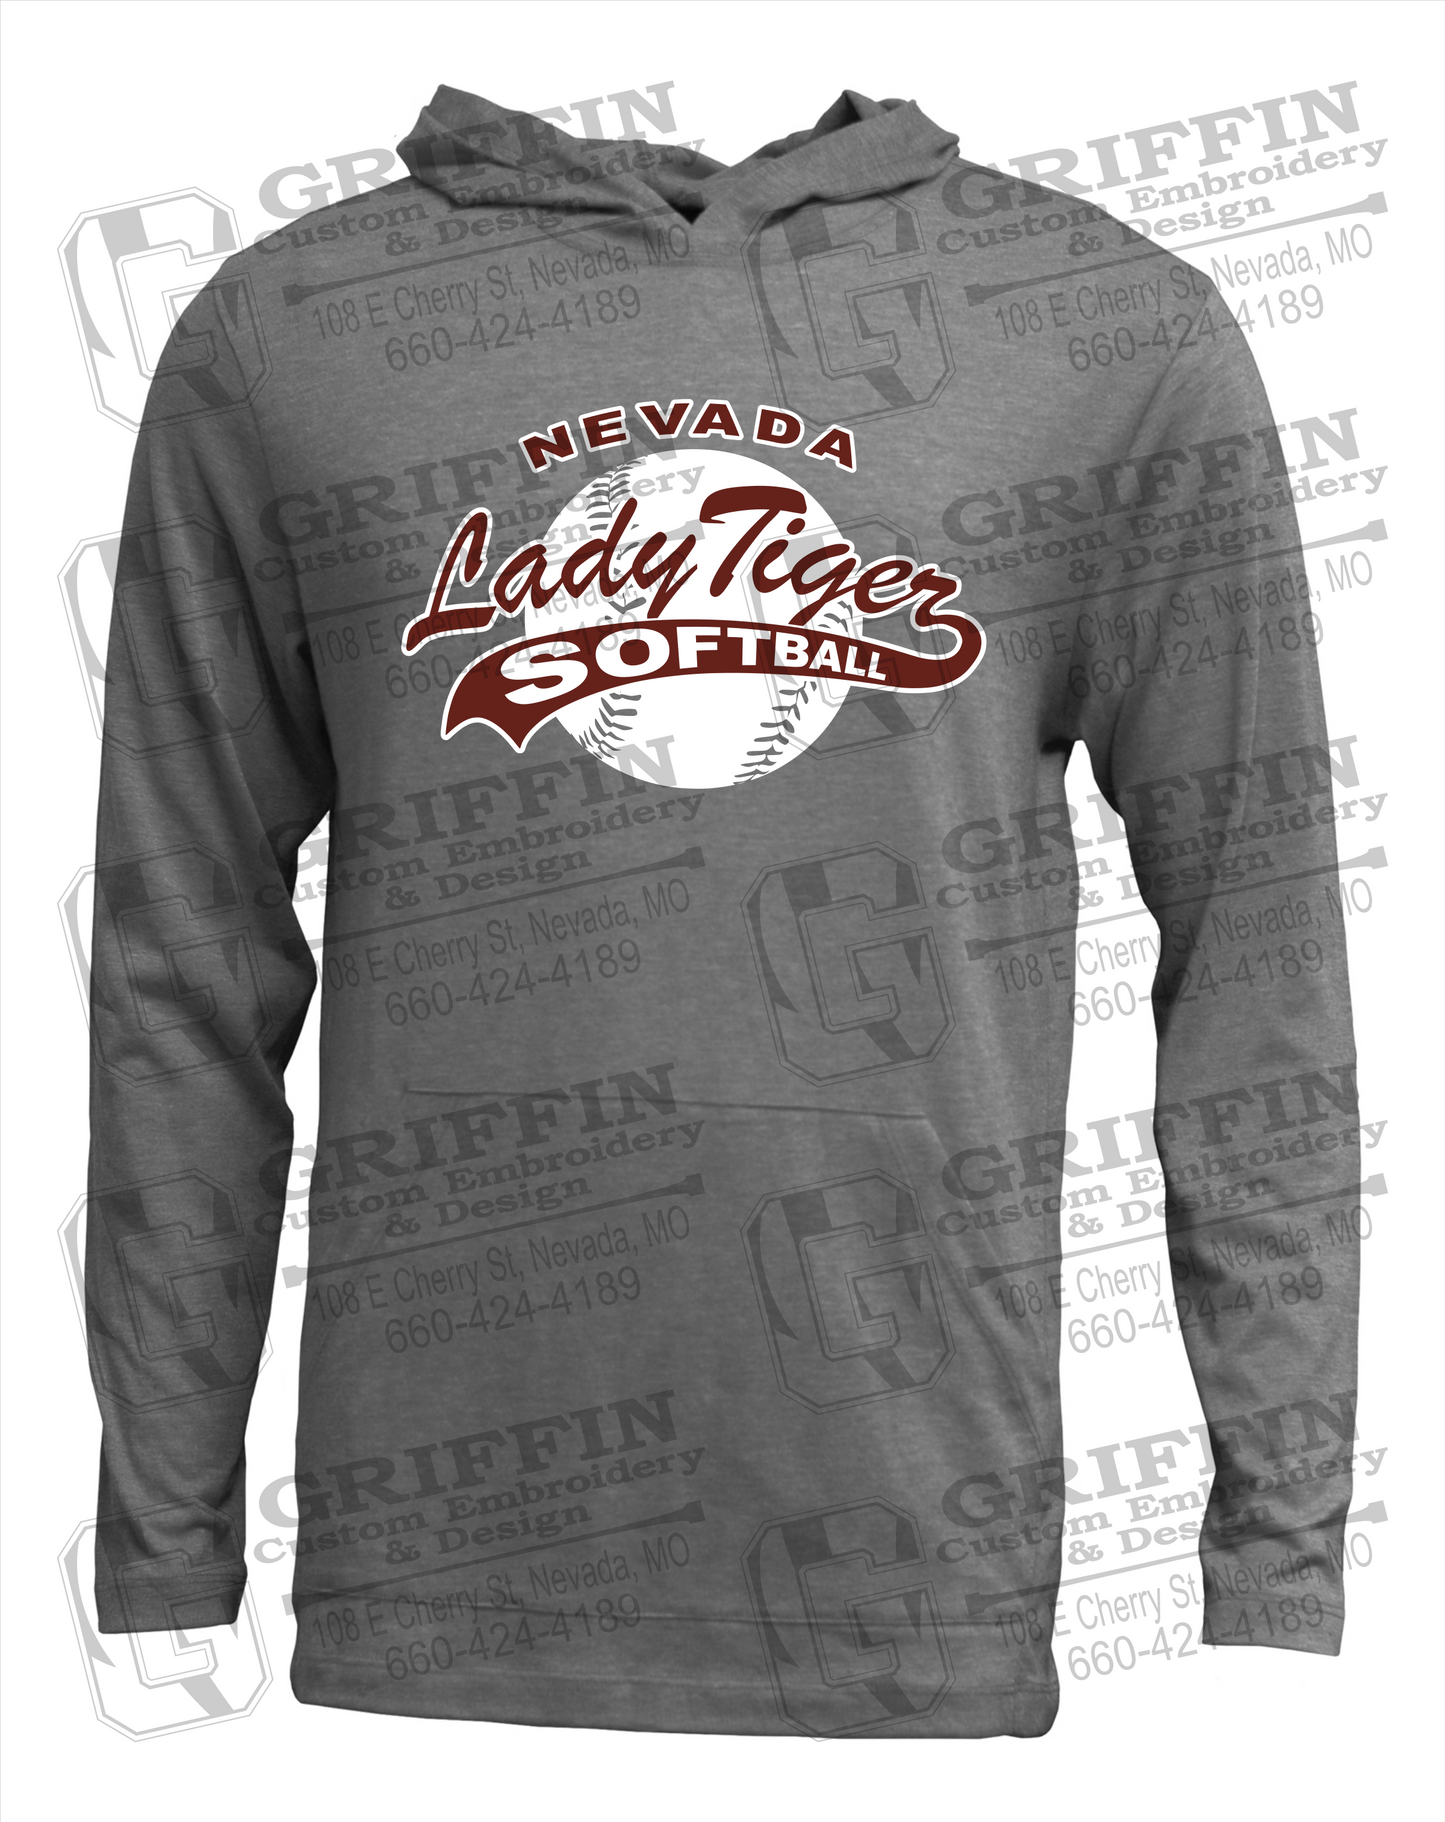 Soft-Tek T-Shirt Hoodie - Softball - Nevada Tigers 21-X